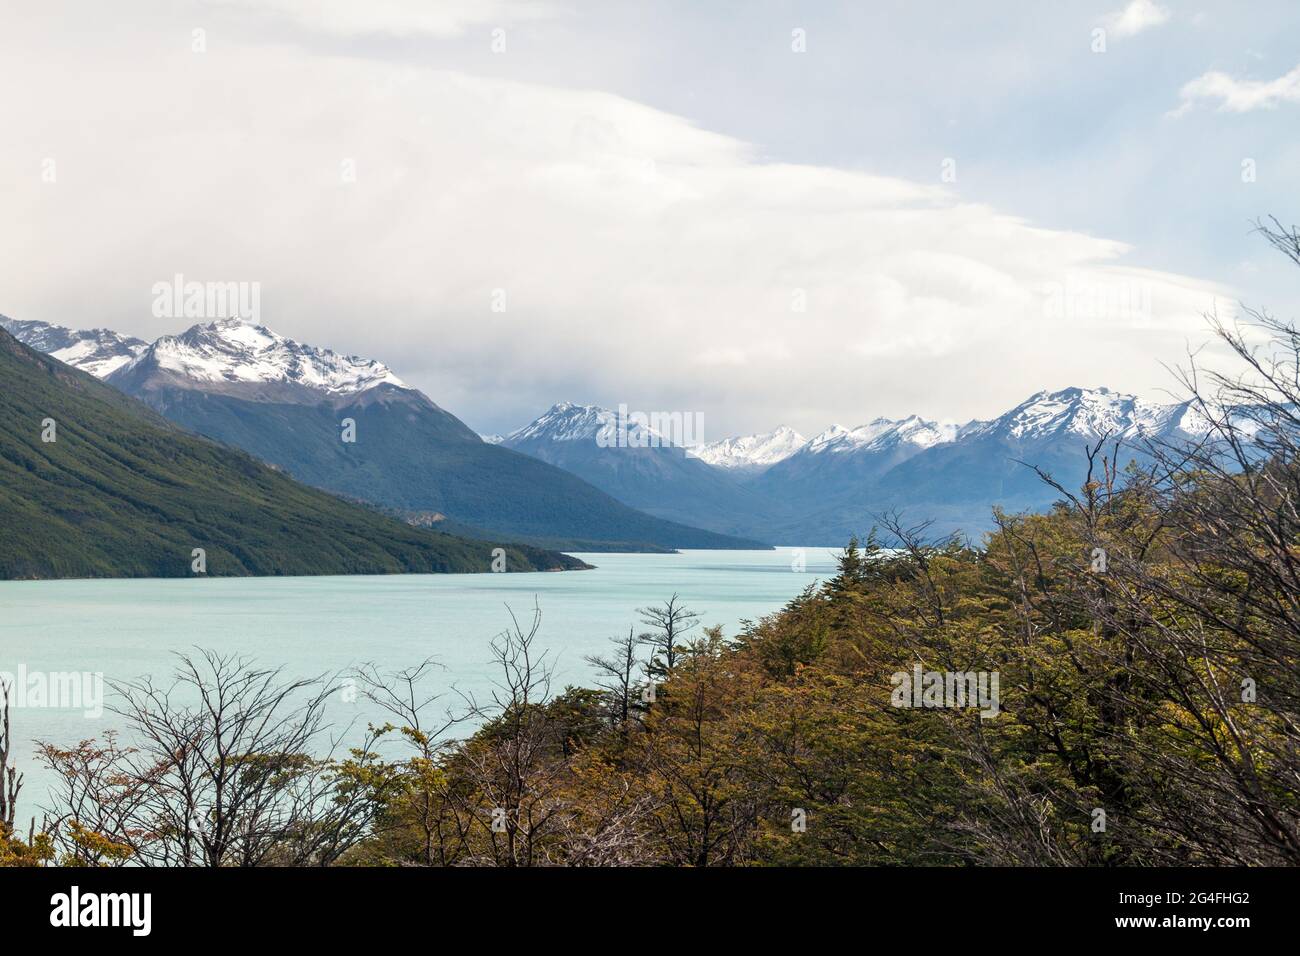 Lago Argentino lake in National Park Los Glaciares, Argentina Stock Photo